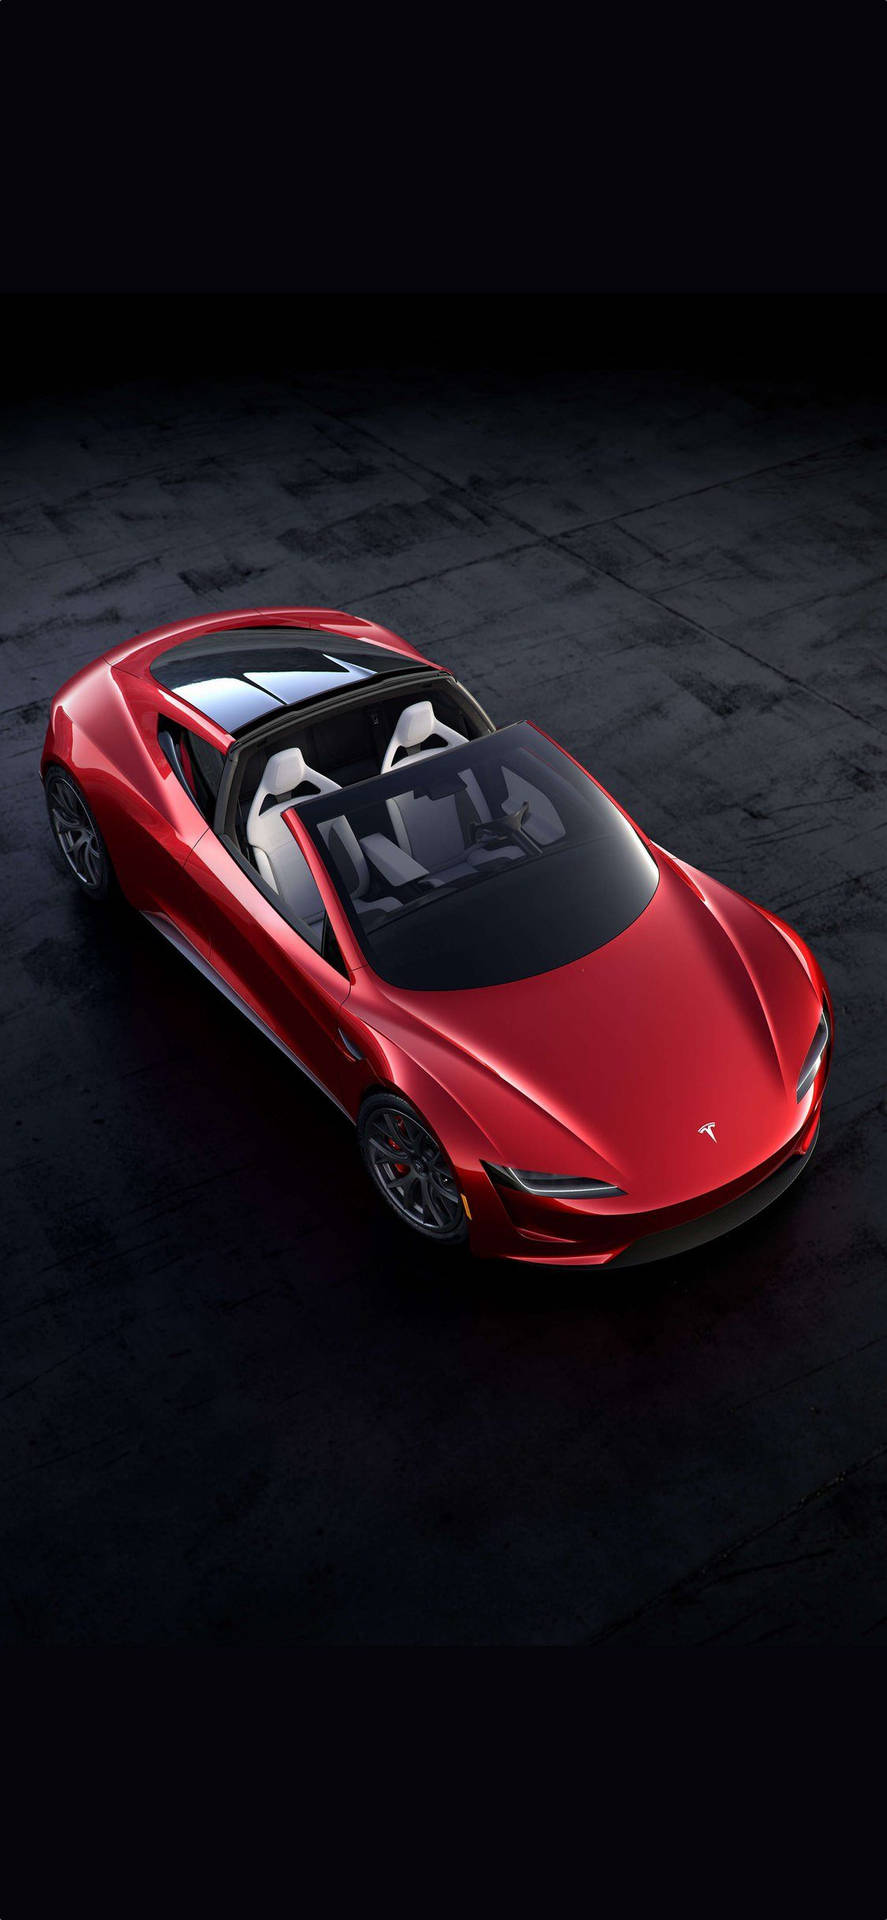 iPhone X Car Red Tesla Roadster Wallpaper